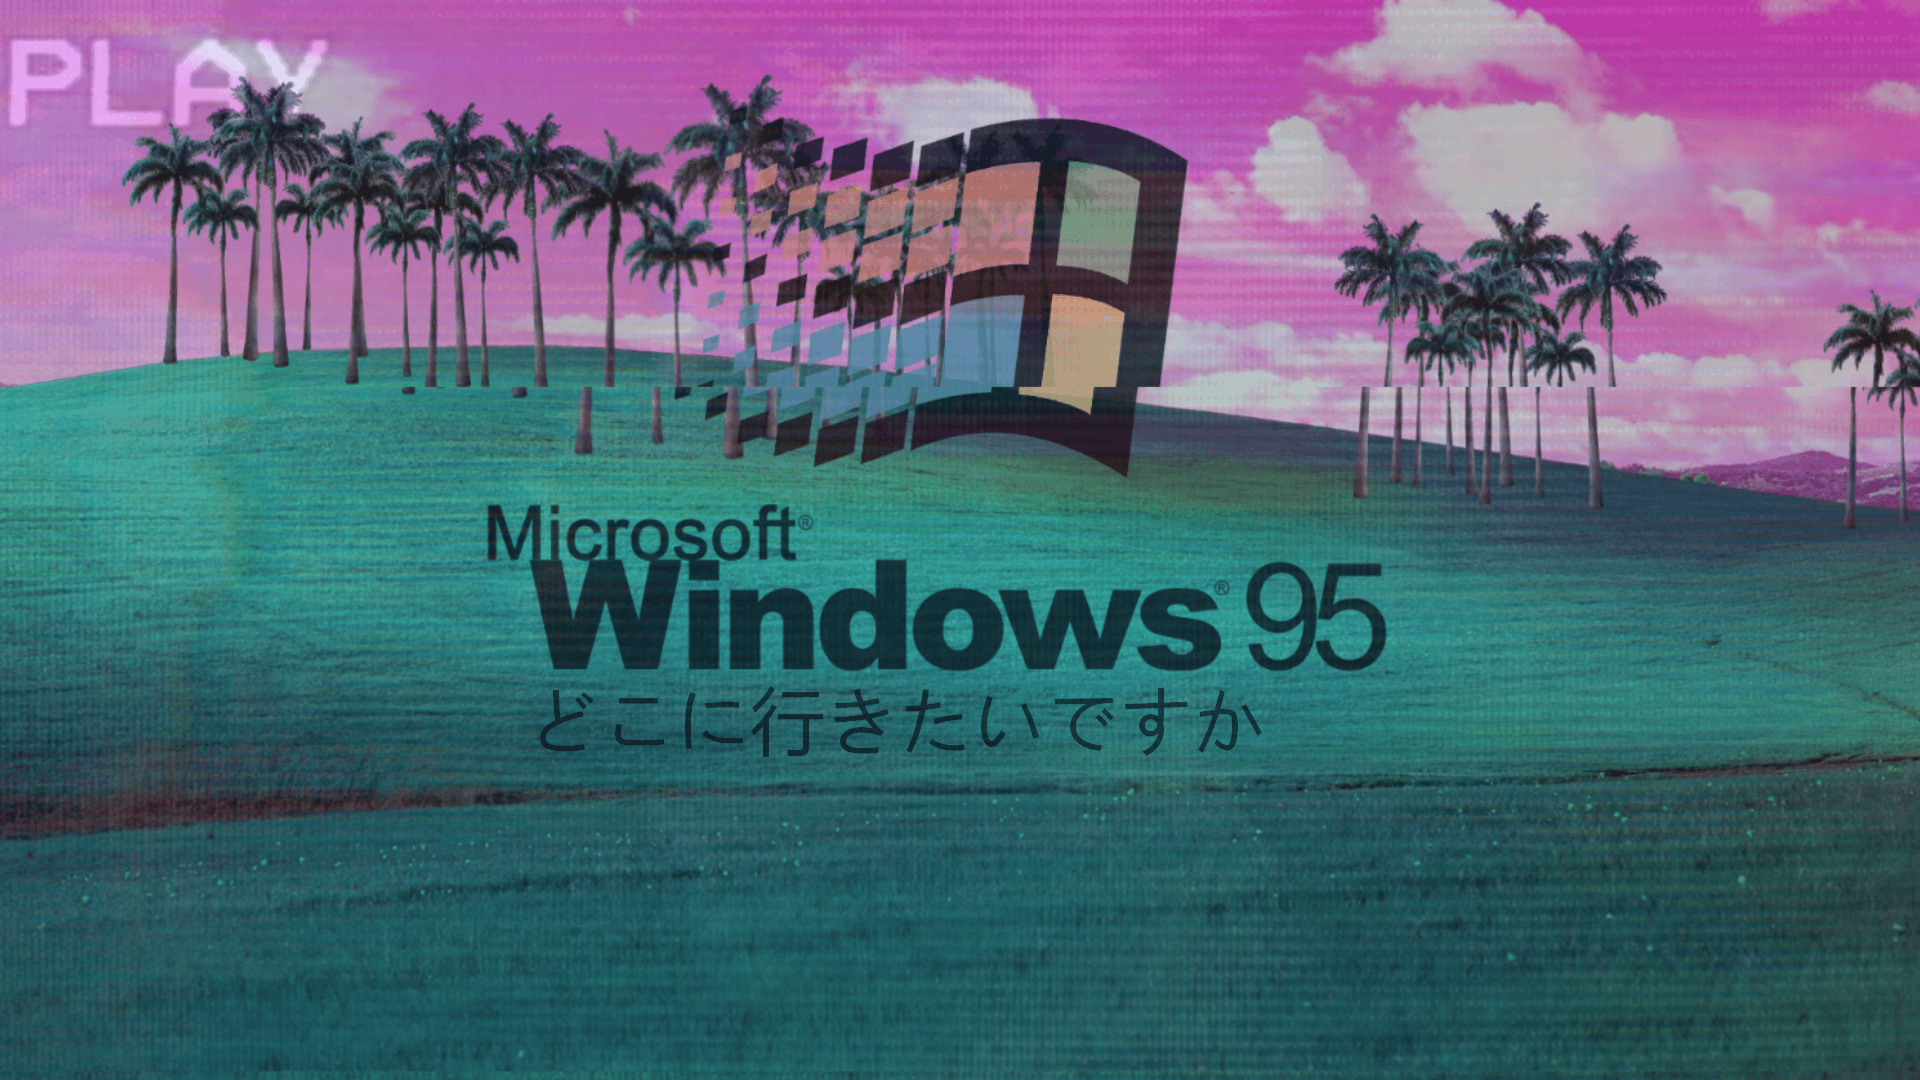 Aesthetic Windows 95 [1920x1080]. Vaporwave wallpaper, Aesthetic desktop wallpaper, 80s aesthetic wallpaper